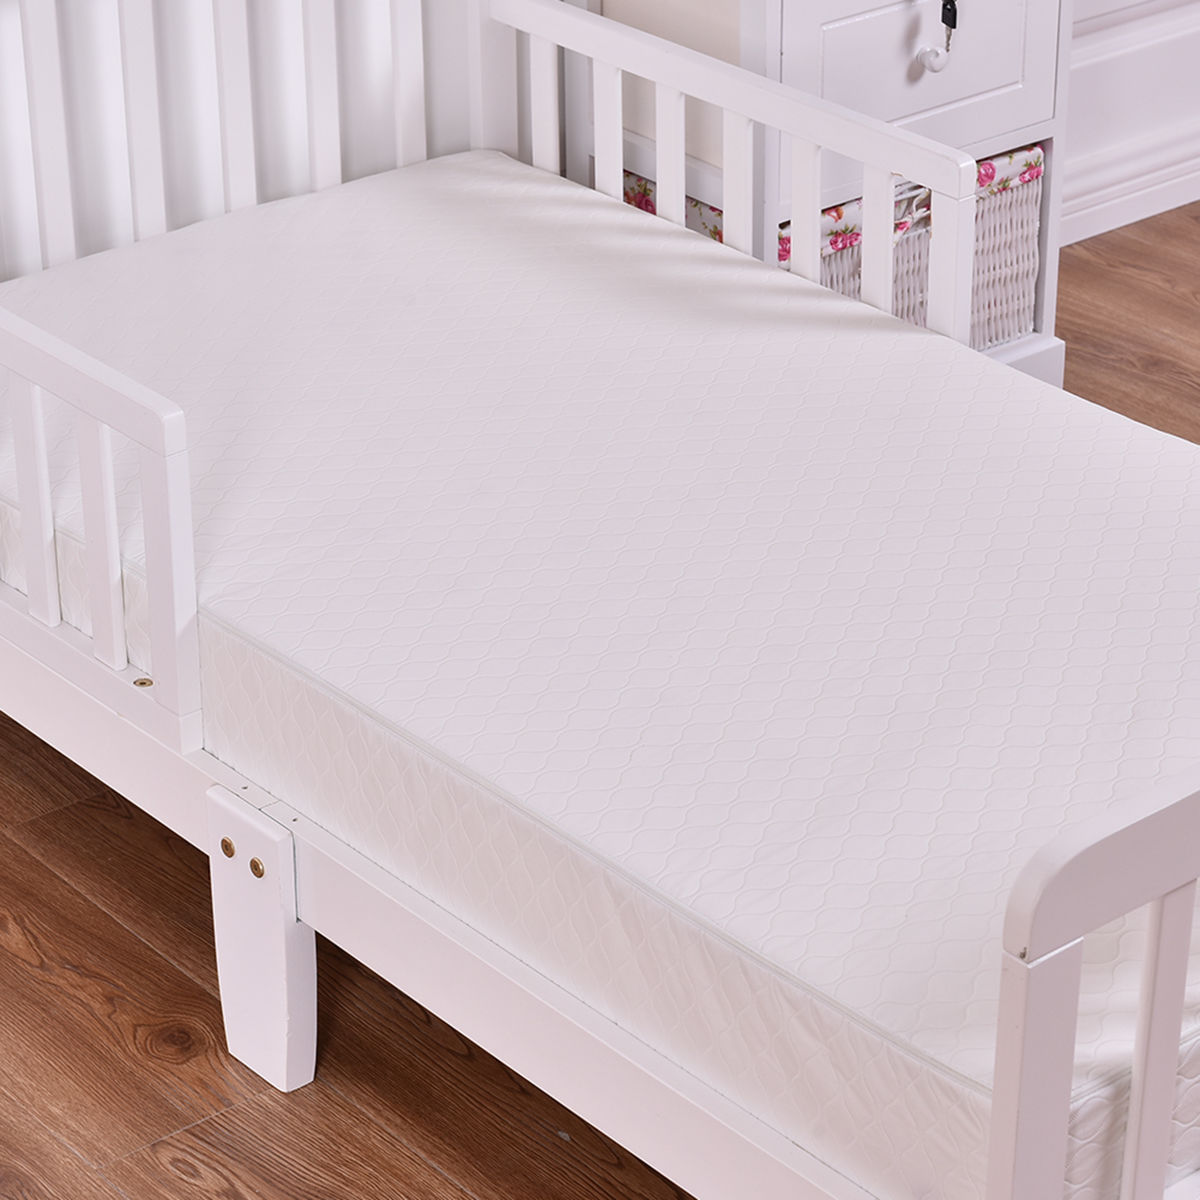 foam for baby crib